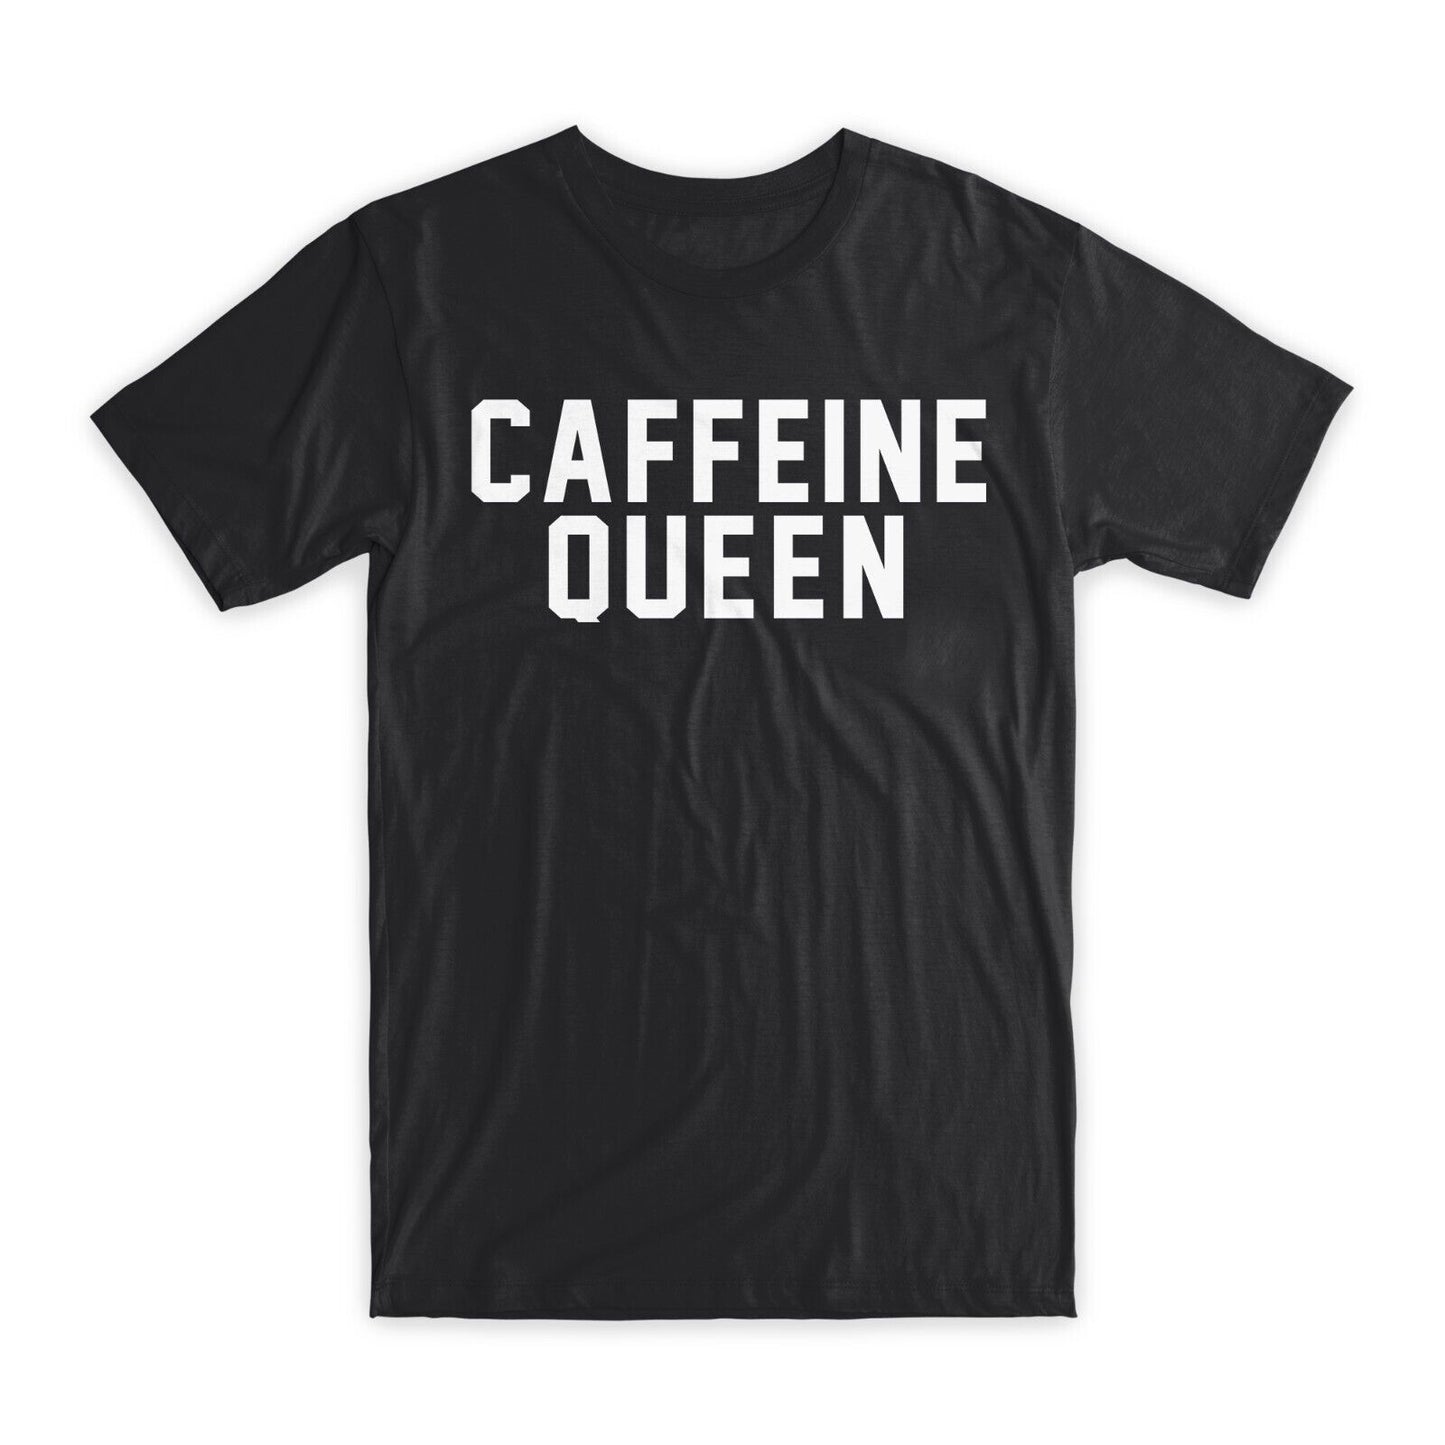 Caffeine Queen T-Shirt Premium Soft Cotton Crew Neck Funny Tees Novelty Gift NEW